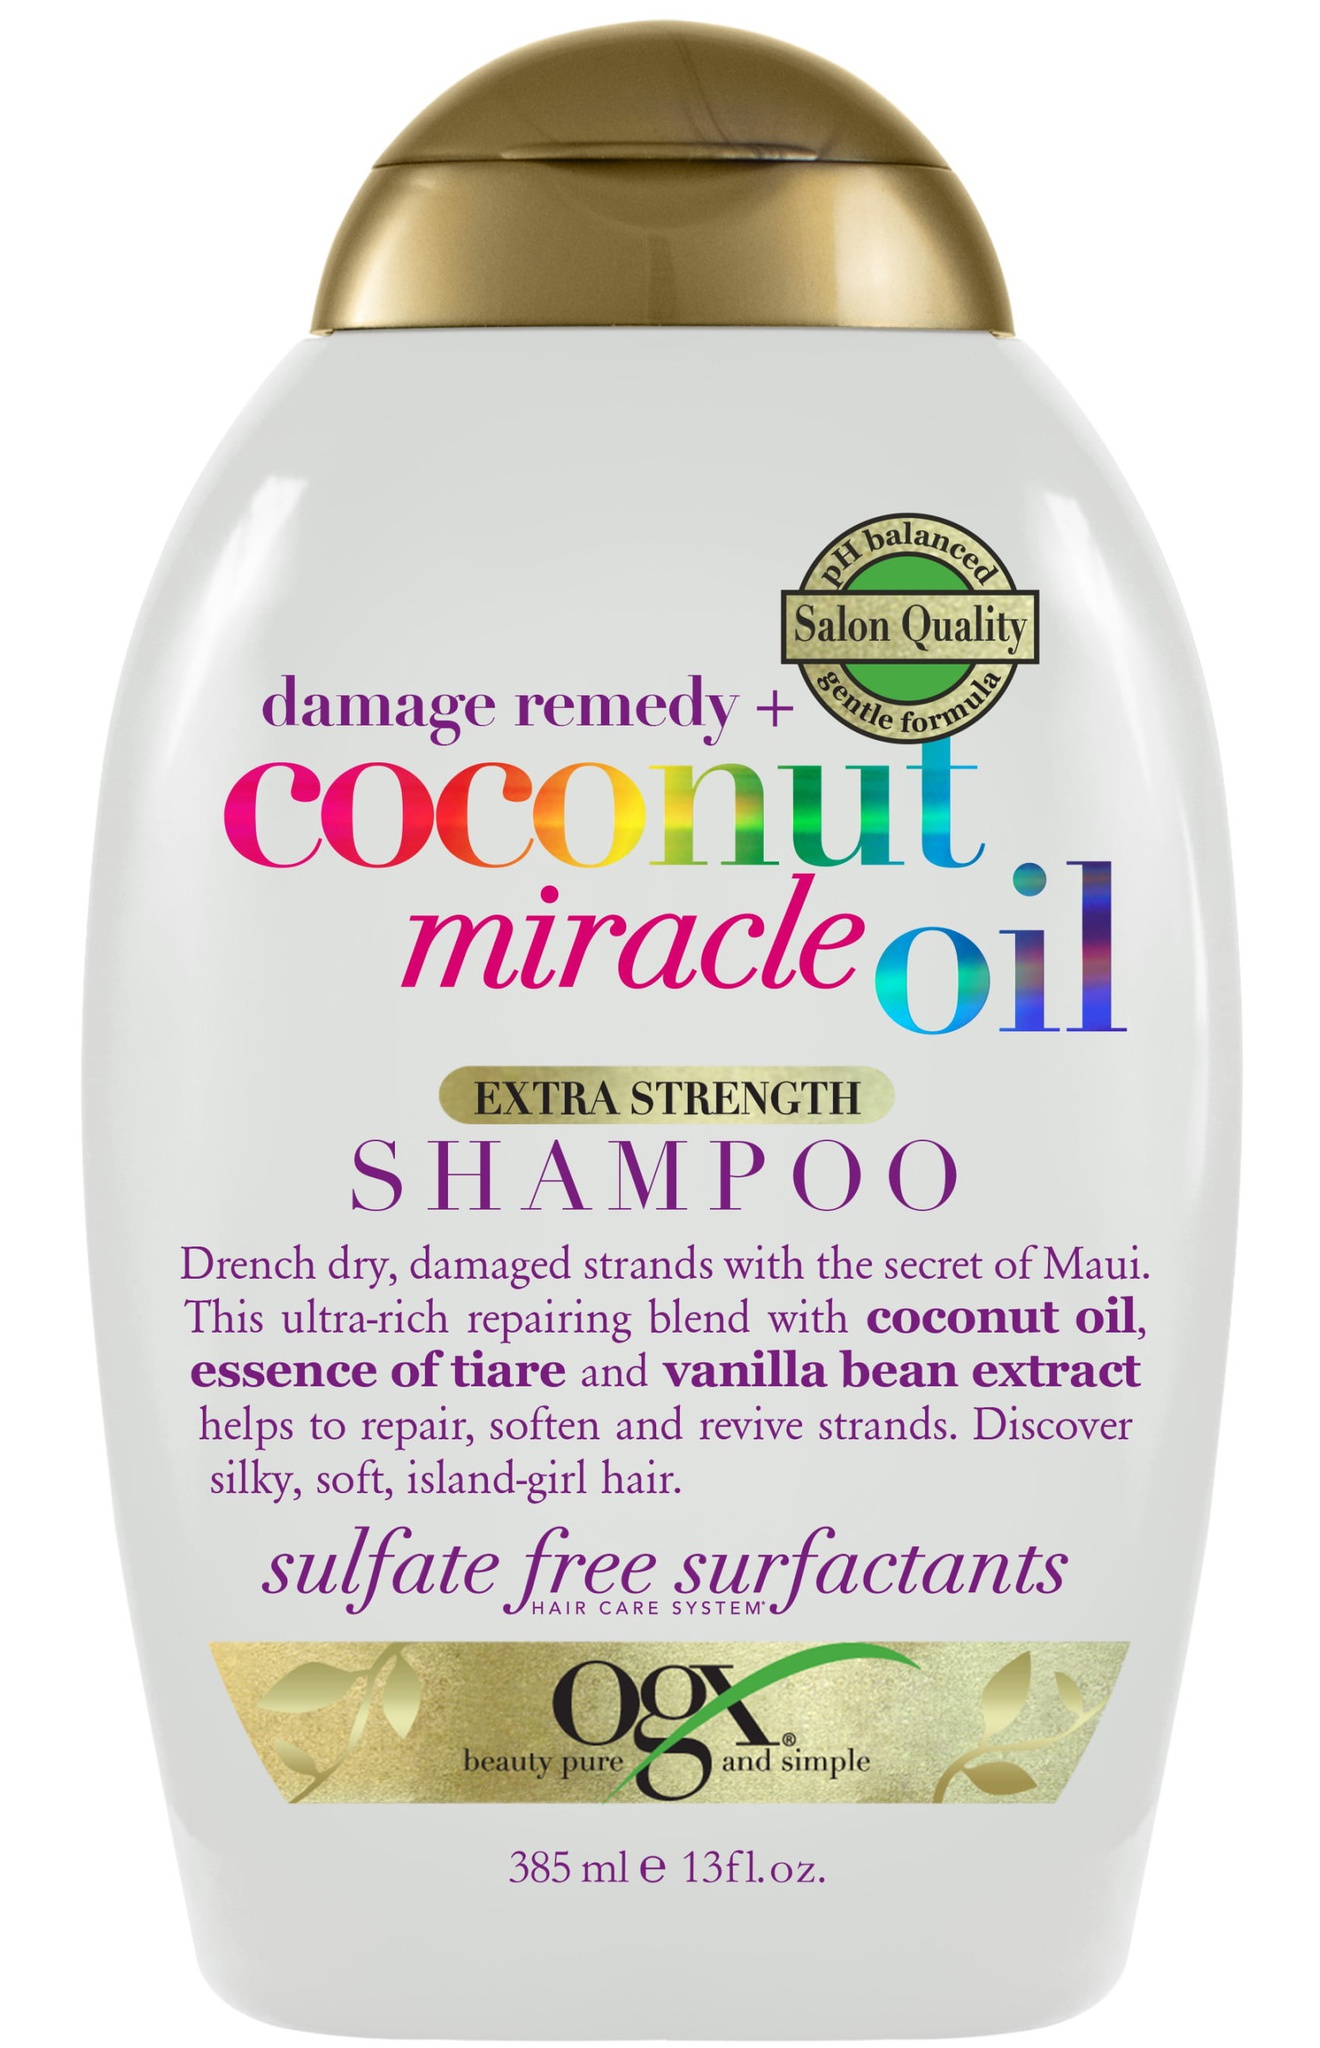 OGX Coconut Miracle Oil shampoo